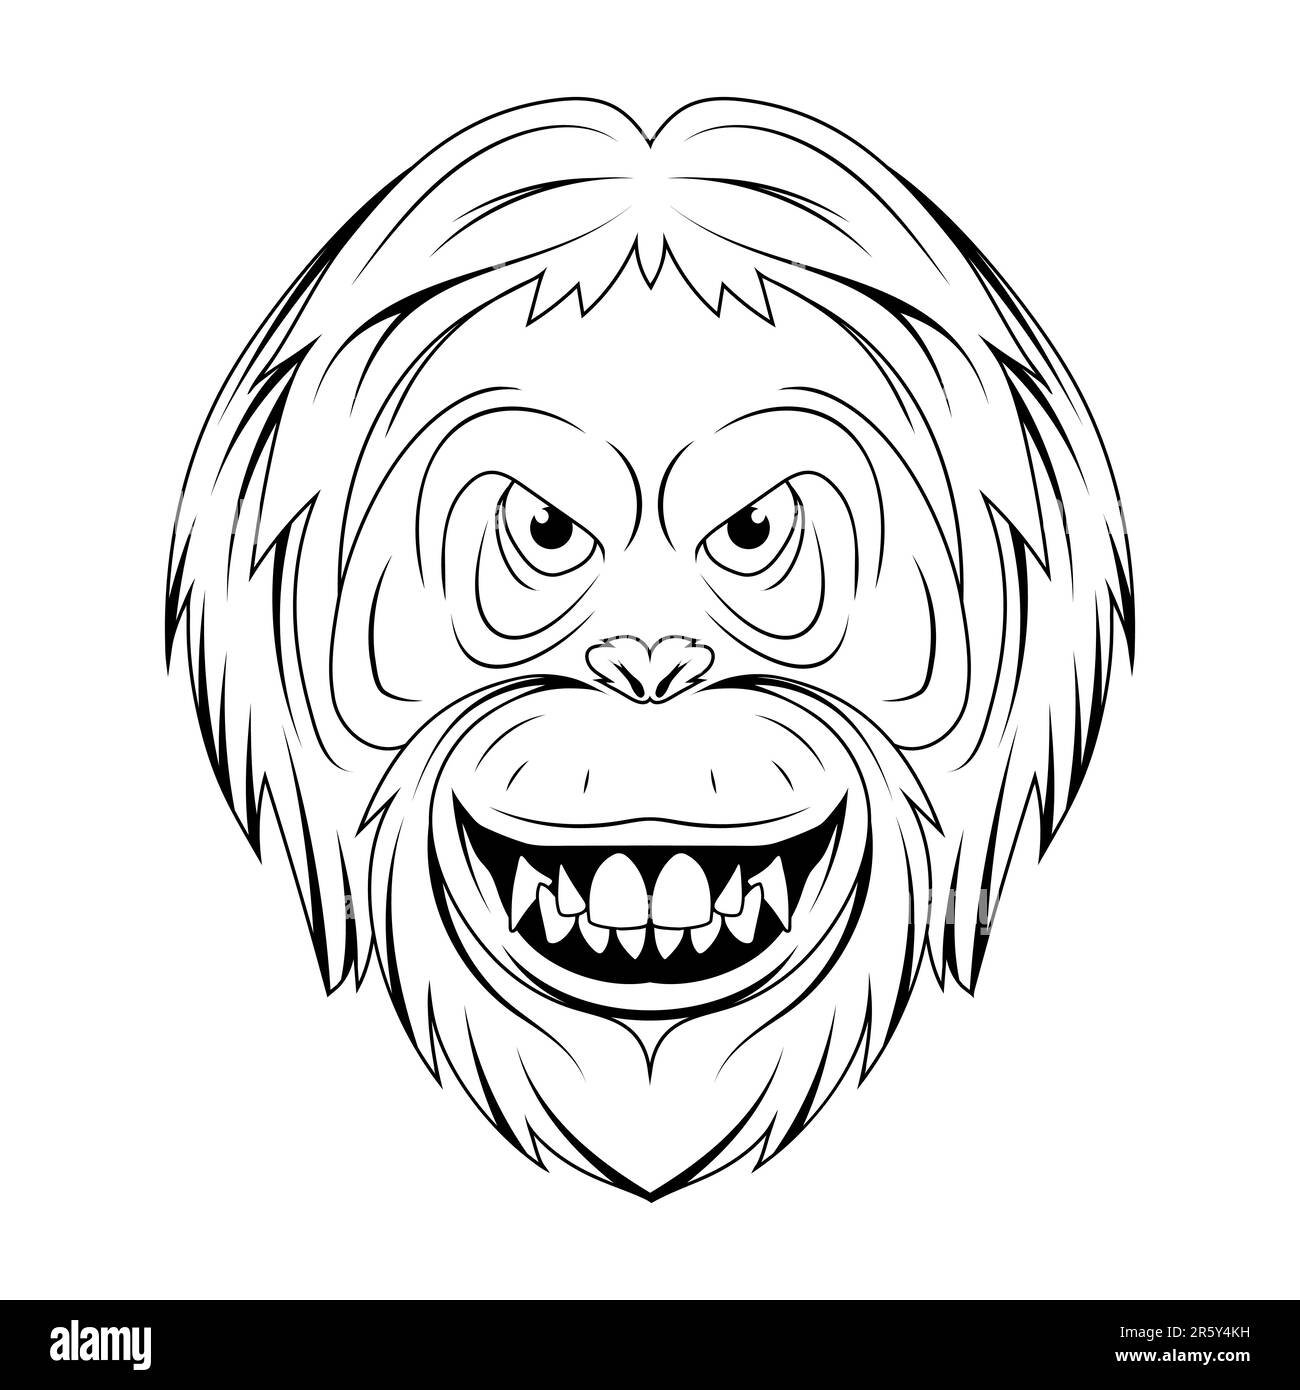 Orang-utan. Vector illustration of a sketch monkey face. Portrait wild animal in zoo. Stock Vector